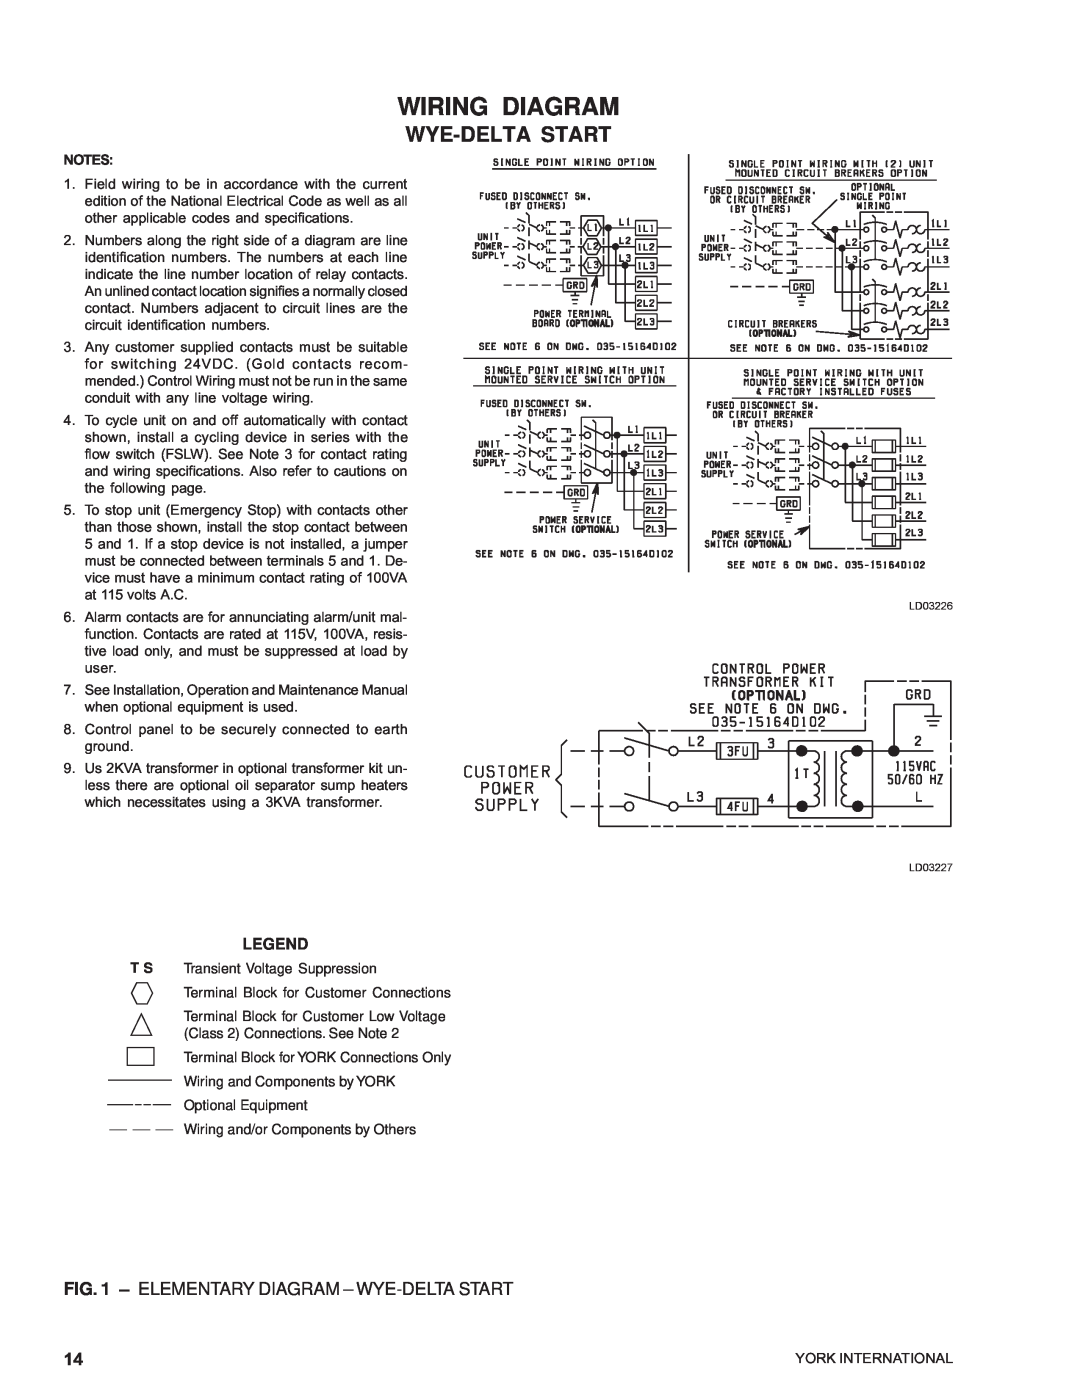 York YCAS0230 manual LD03226 LD03227, Wiring Diagram, Elementary Diagram - Wye-Deltastart 